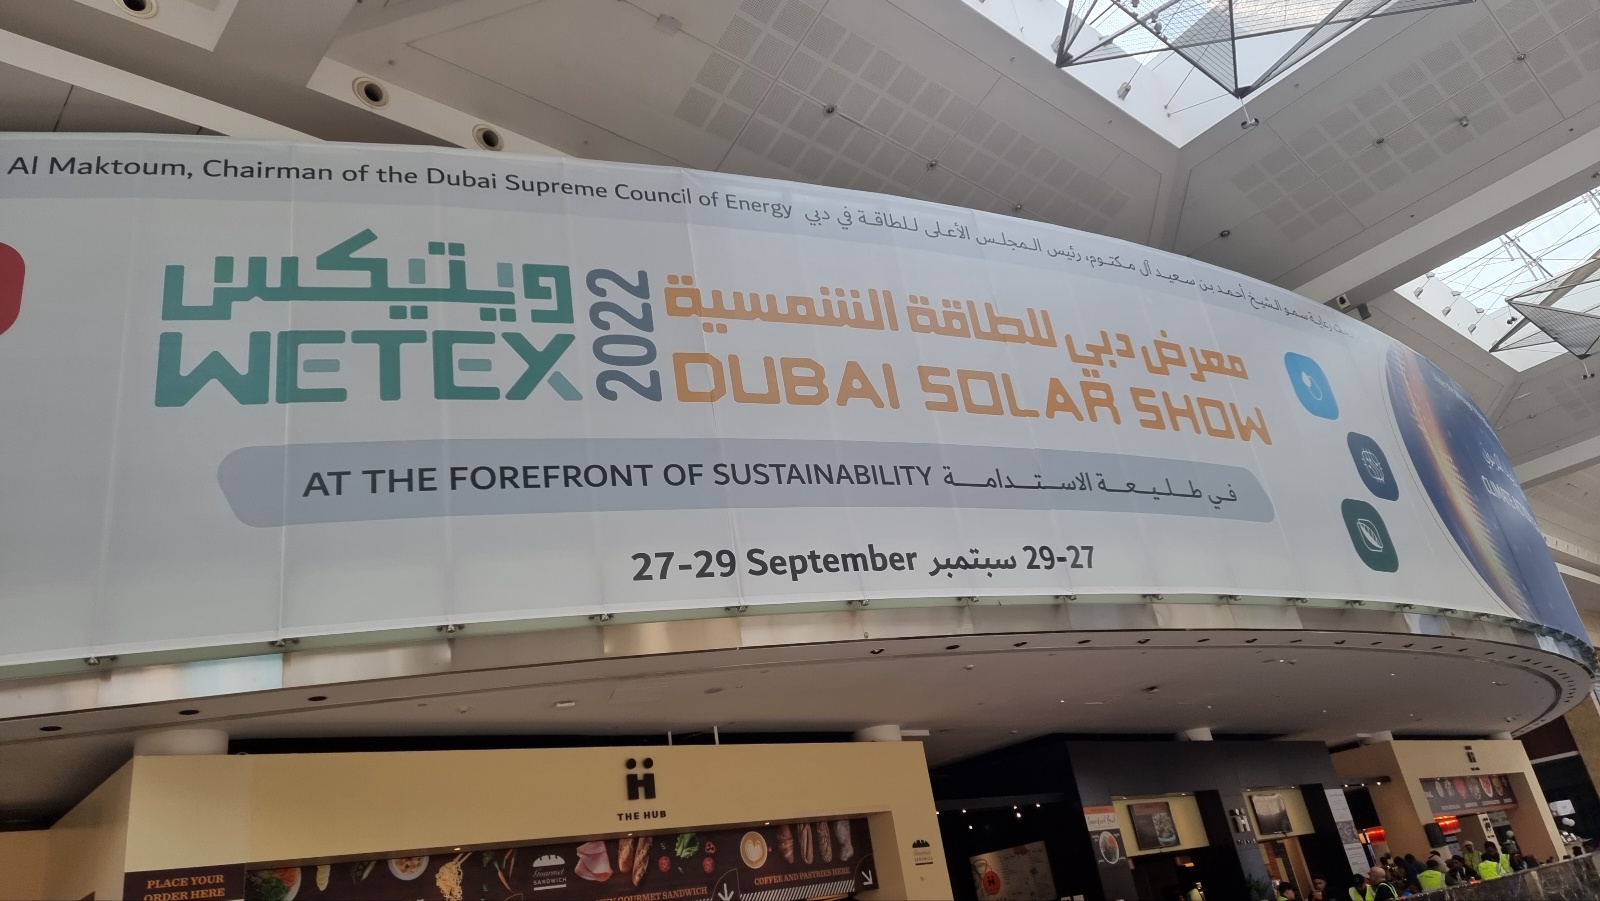 22' Dubai Wetex_Dubai Solar Show [첨부 이미지1]